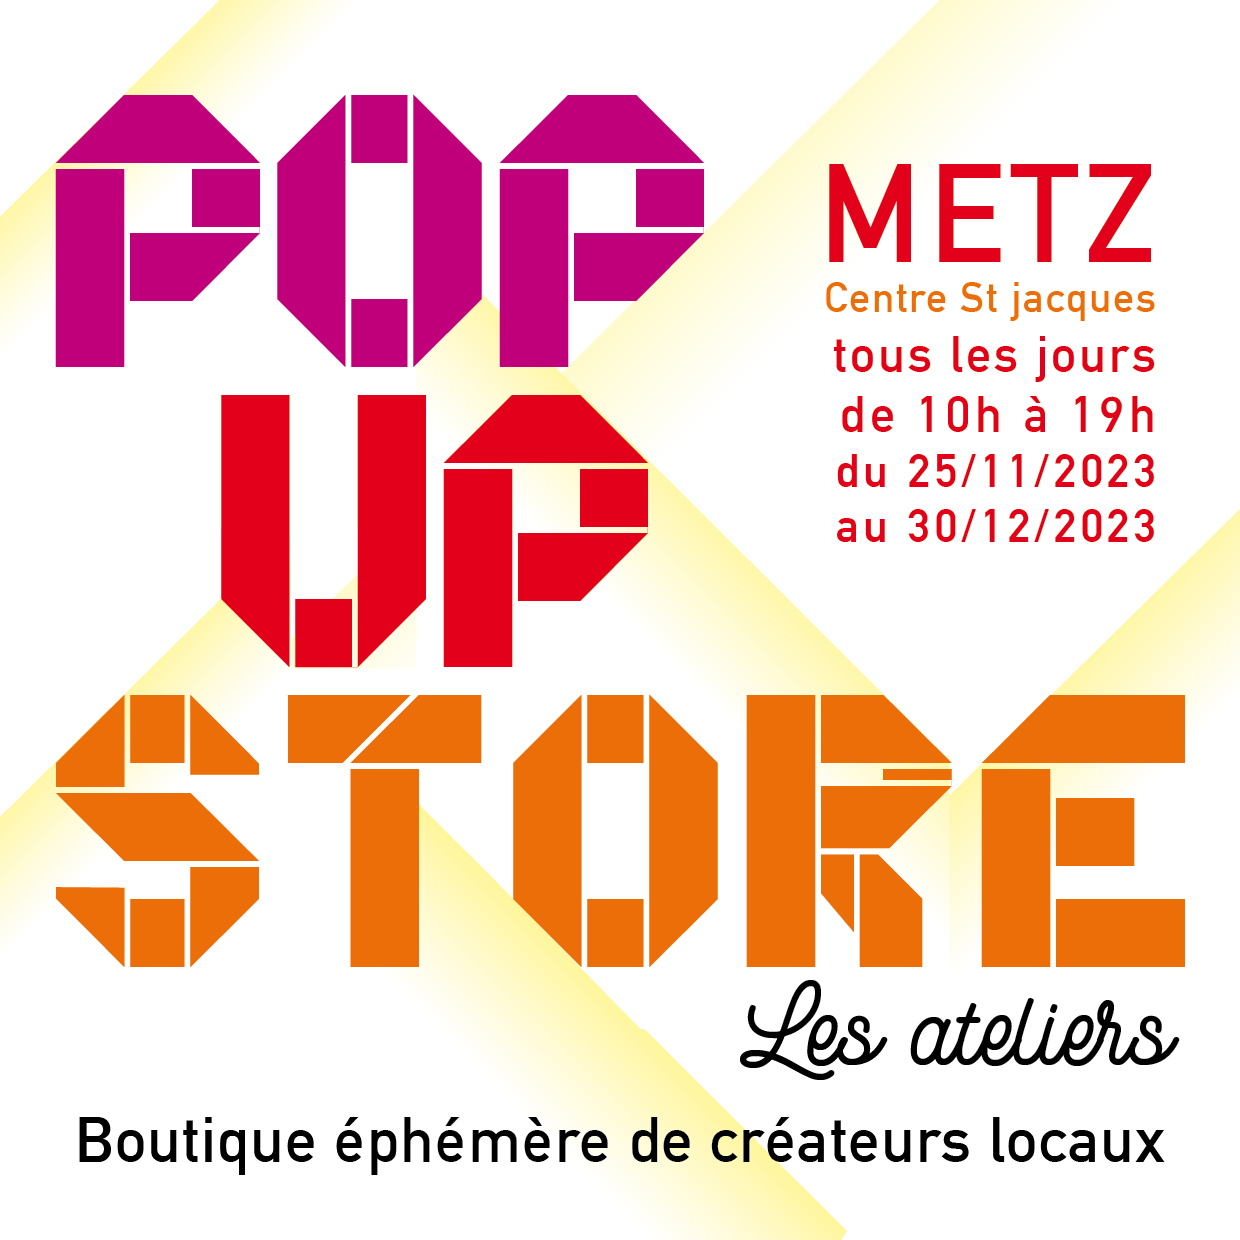 Pop up store - ephemeral designer boutique